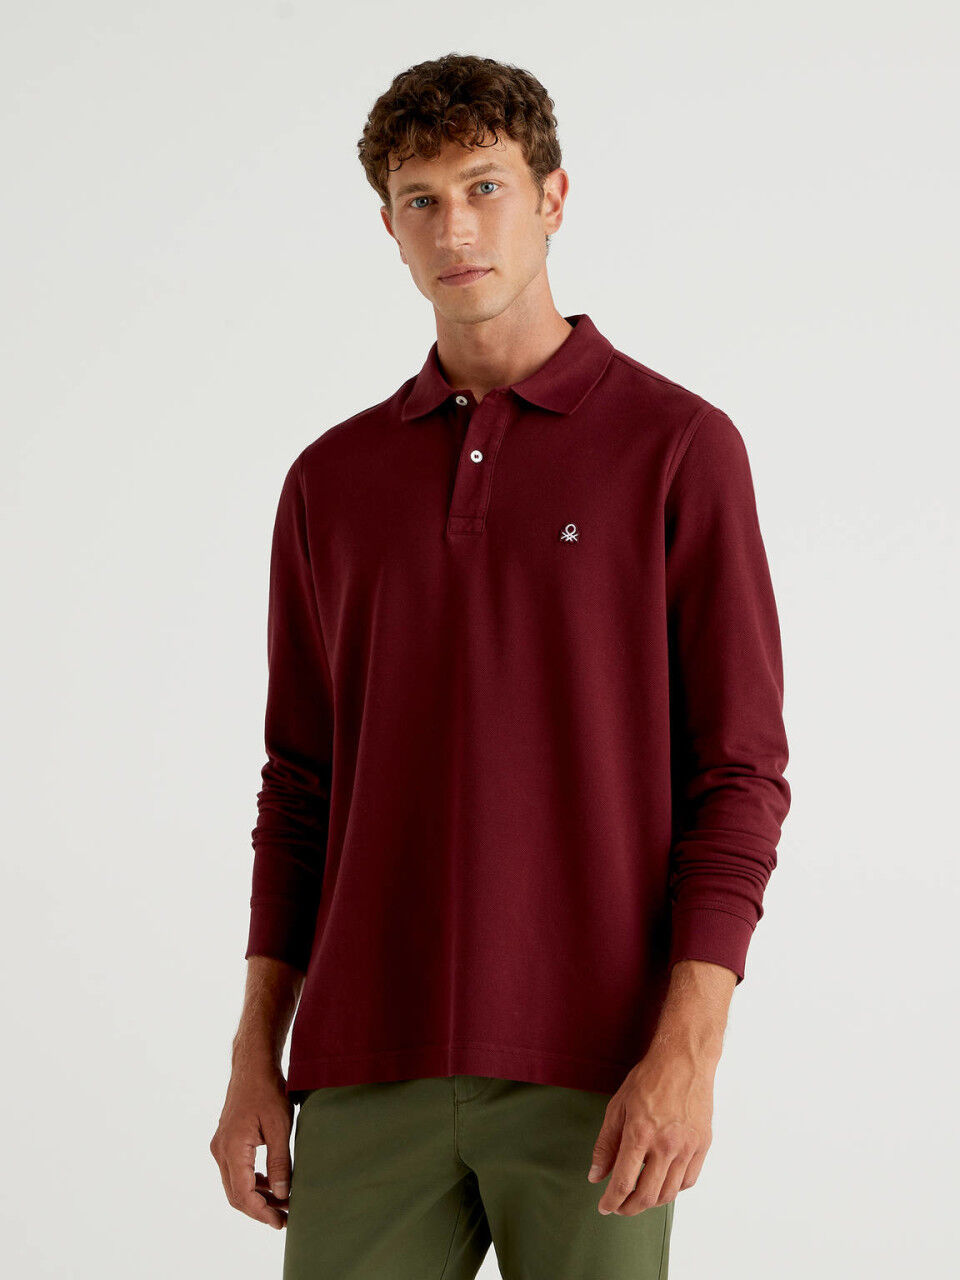 maroon long sleeve polo shirt